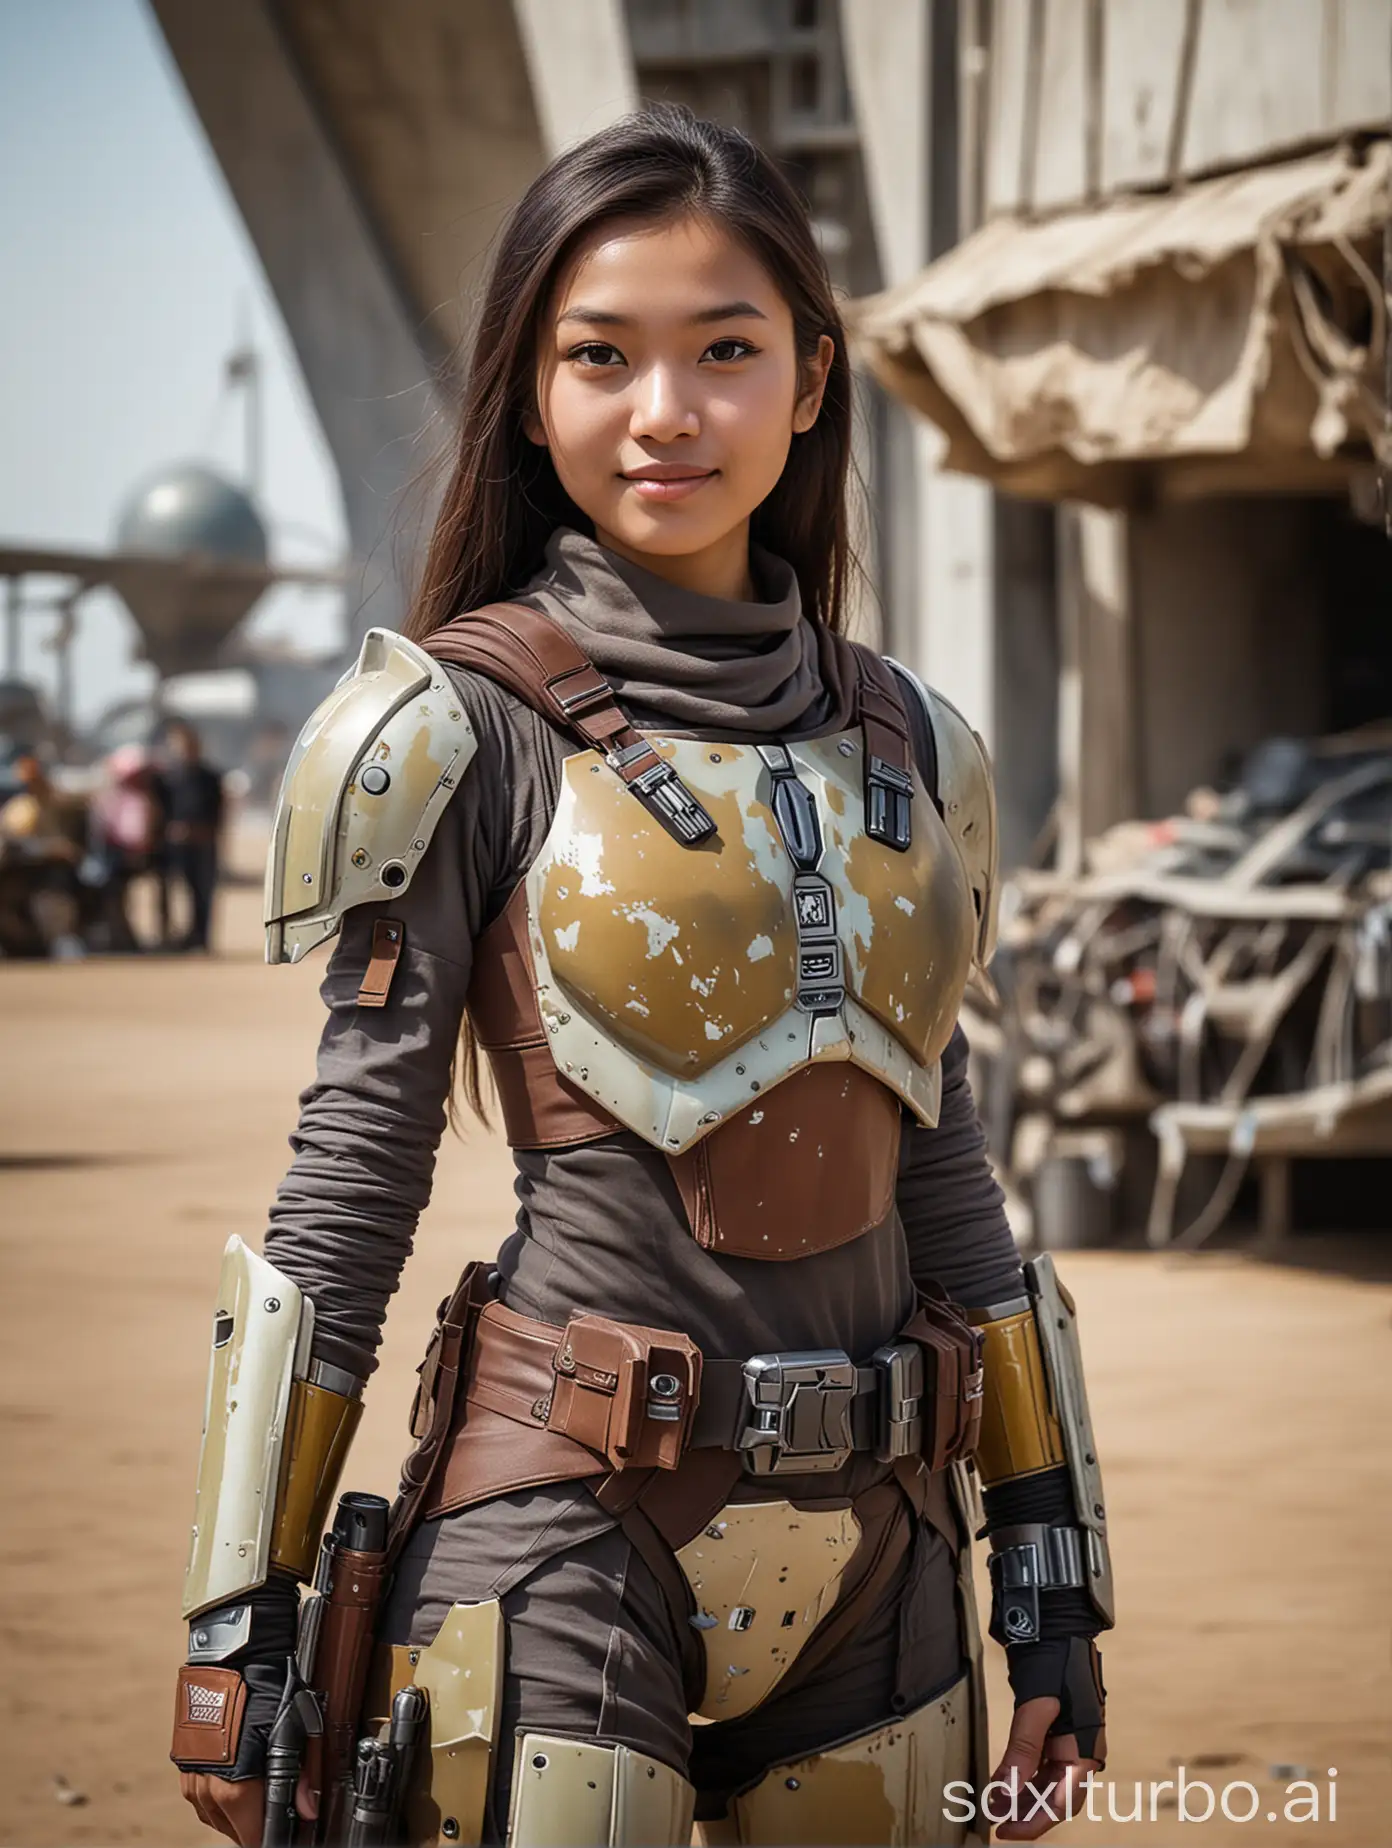 Southeast-Asian-Teen-Mandalorian-Girl-at-Spaceport